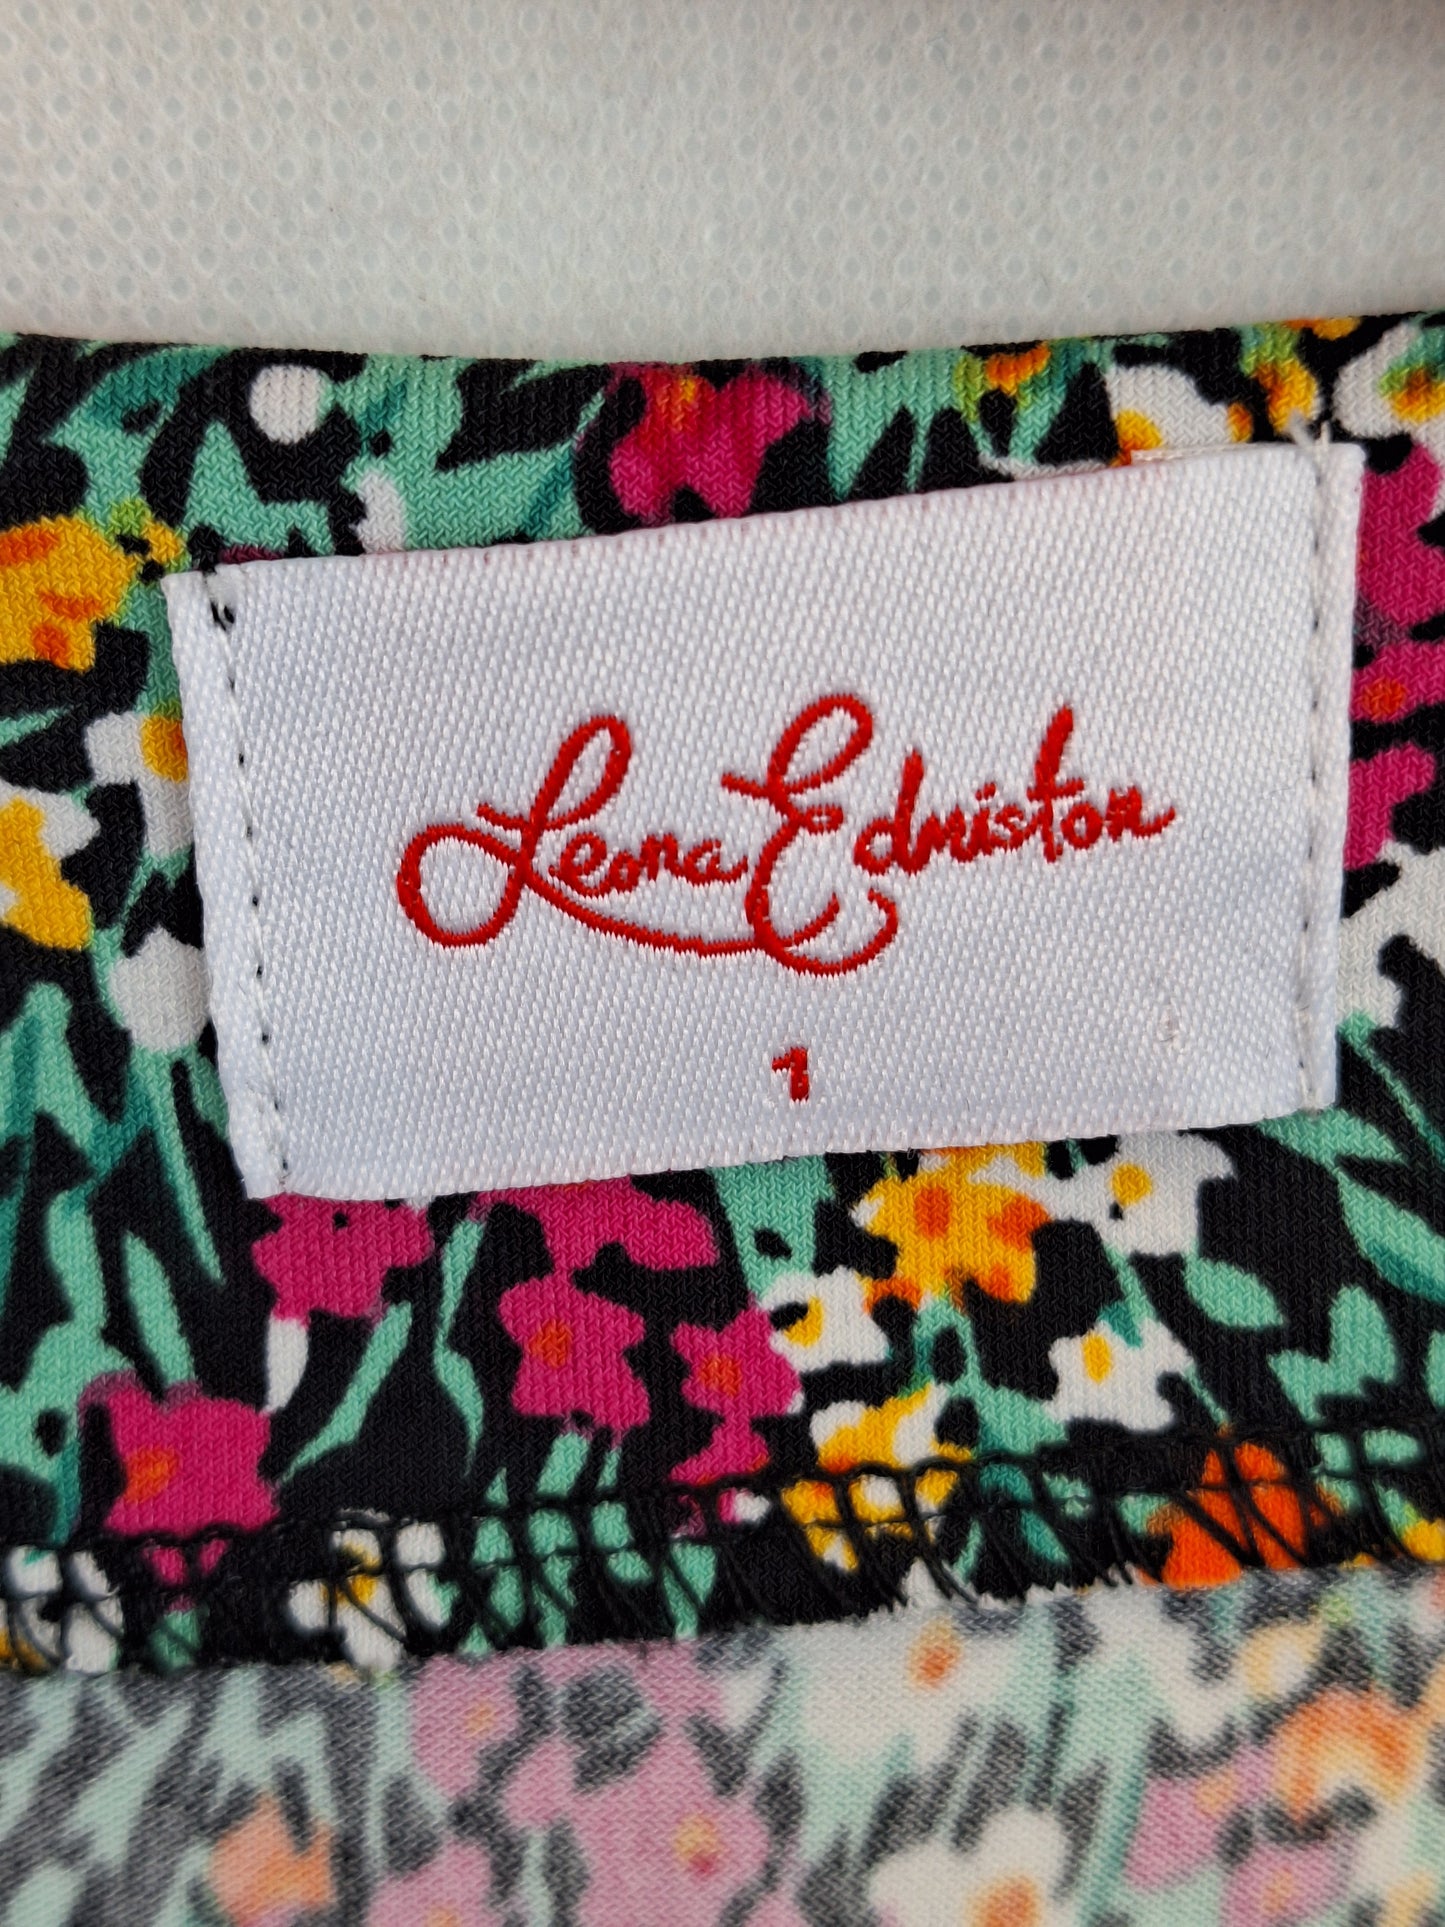 Leona Edmiston Elegant Lush Wrap Maxi Dress Size 10 by SwapUp-Online Second Hand Store-Online Thrift Store